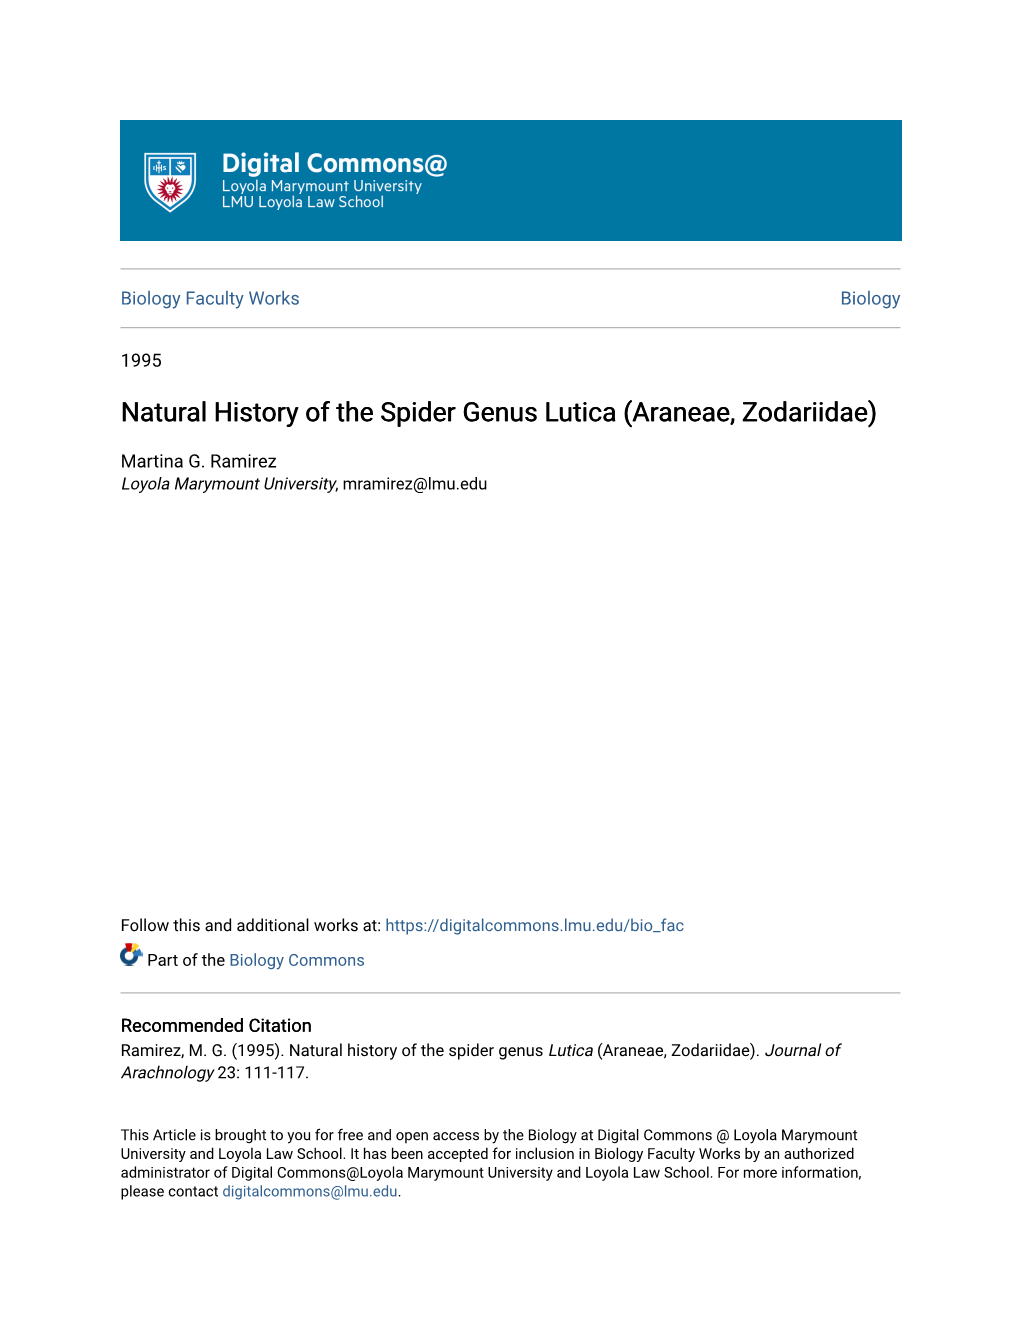 Natural History of the Spider Genus Lutica (Araneae, Zodariidae)